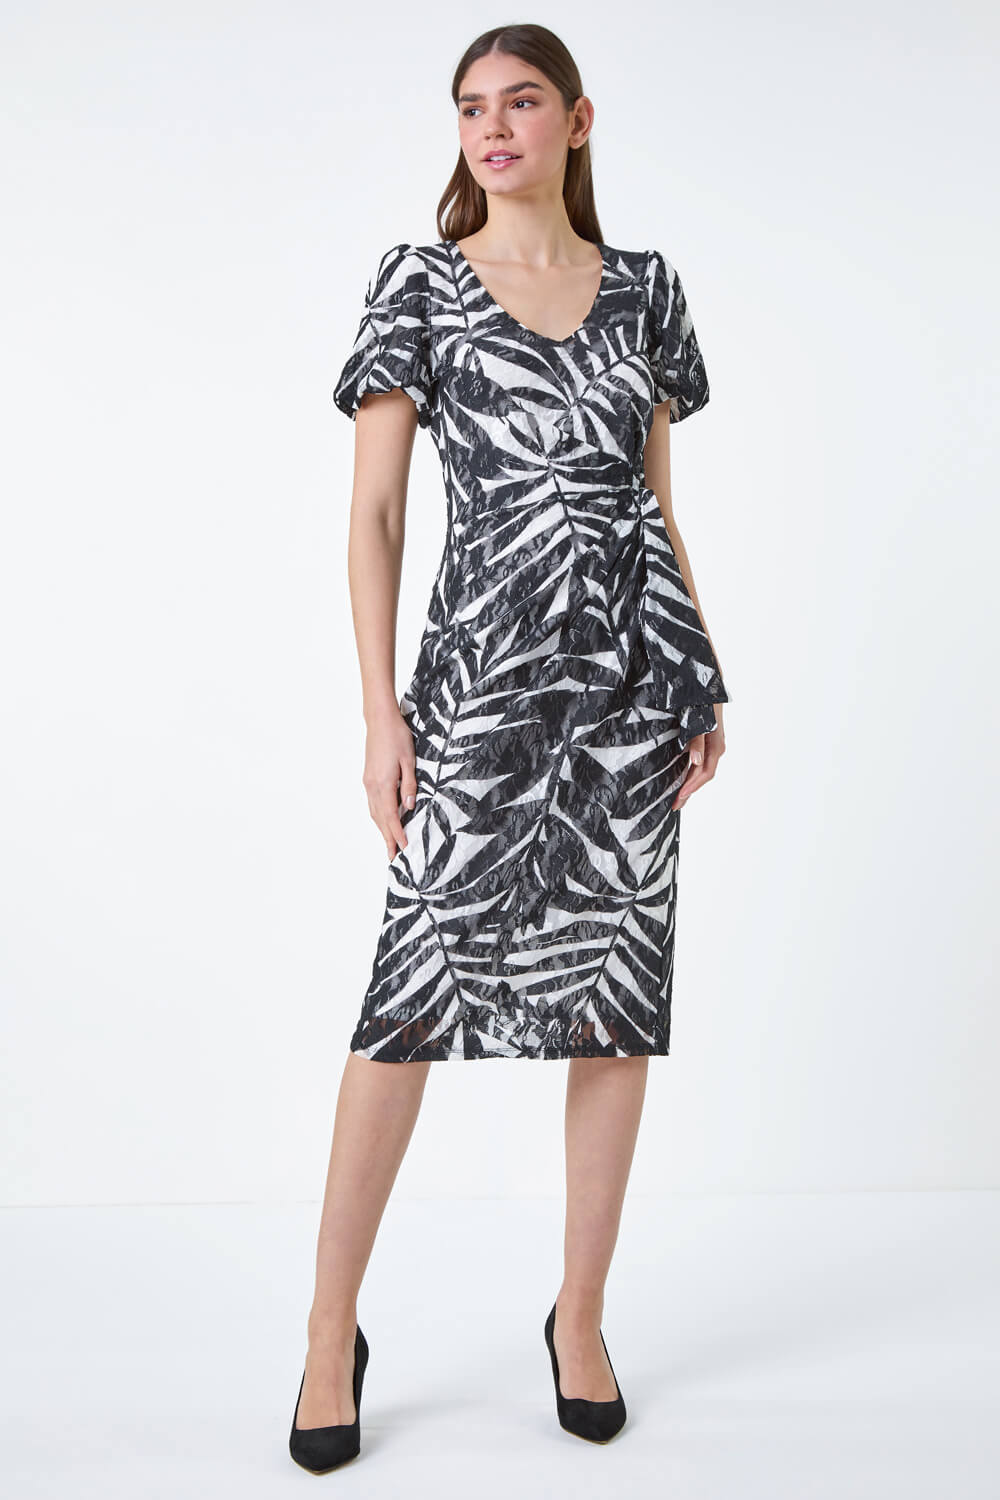 Black Leaf Print Stretch Lace Tie Dress, Image 2 of 5